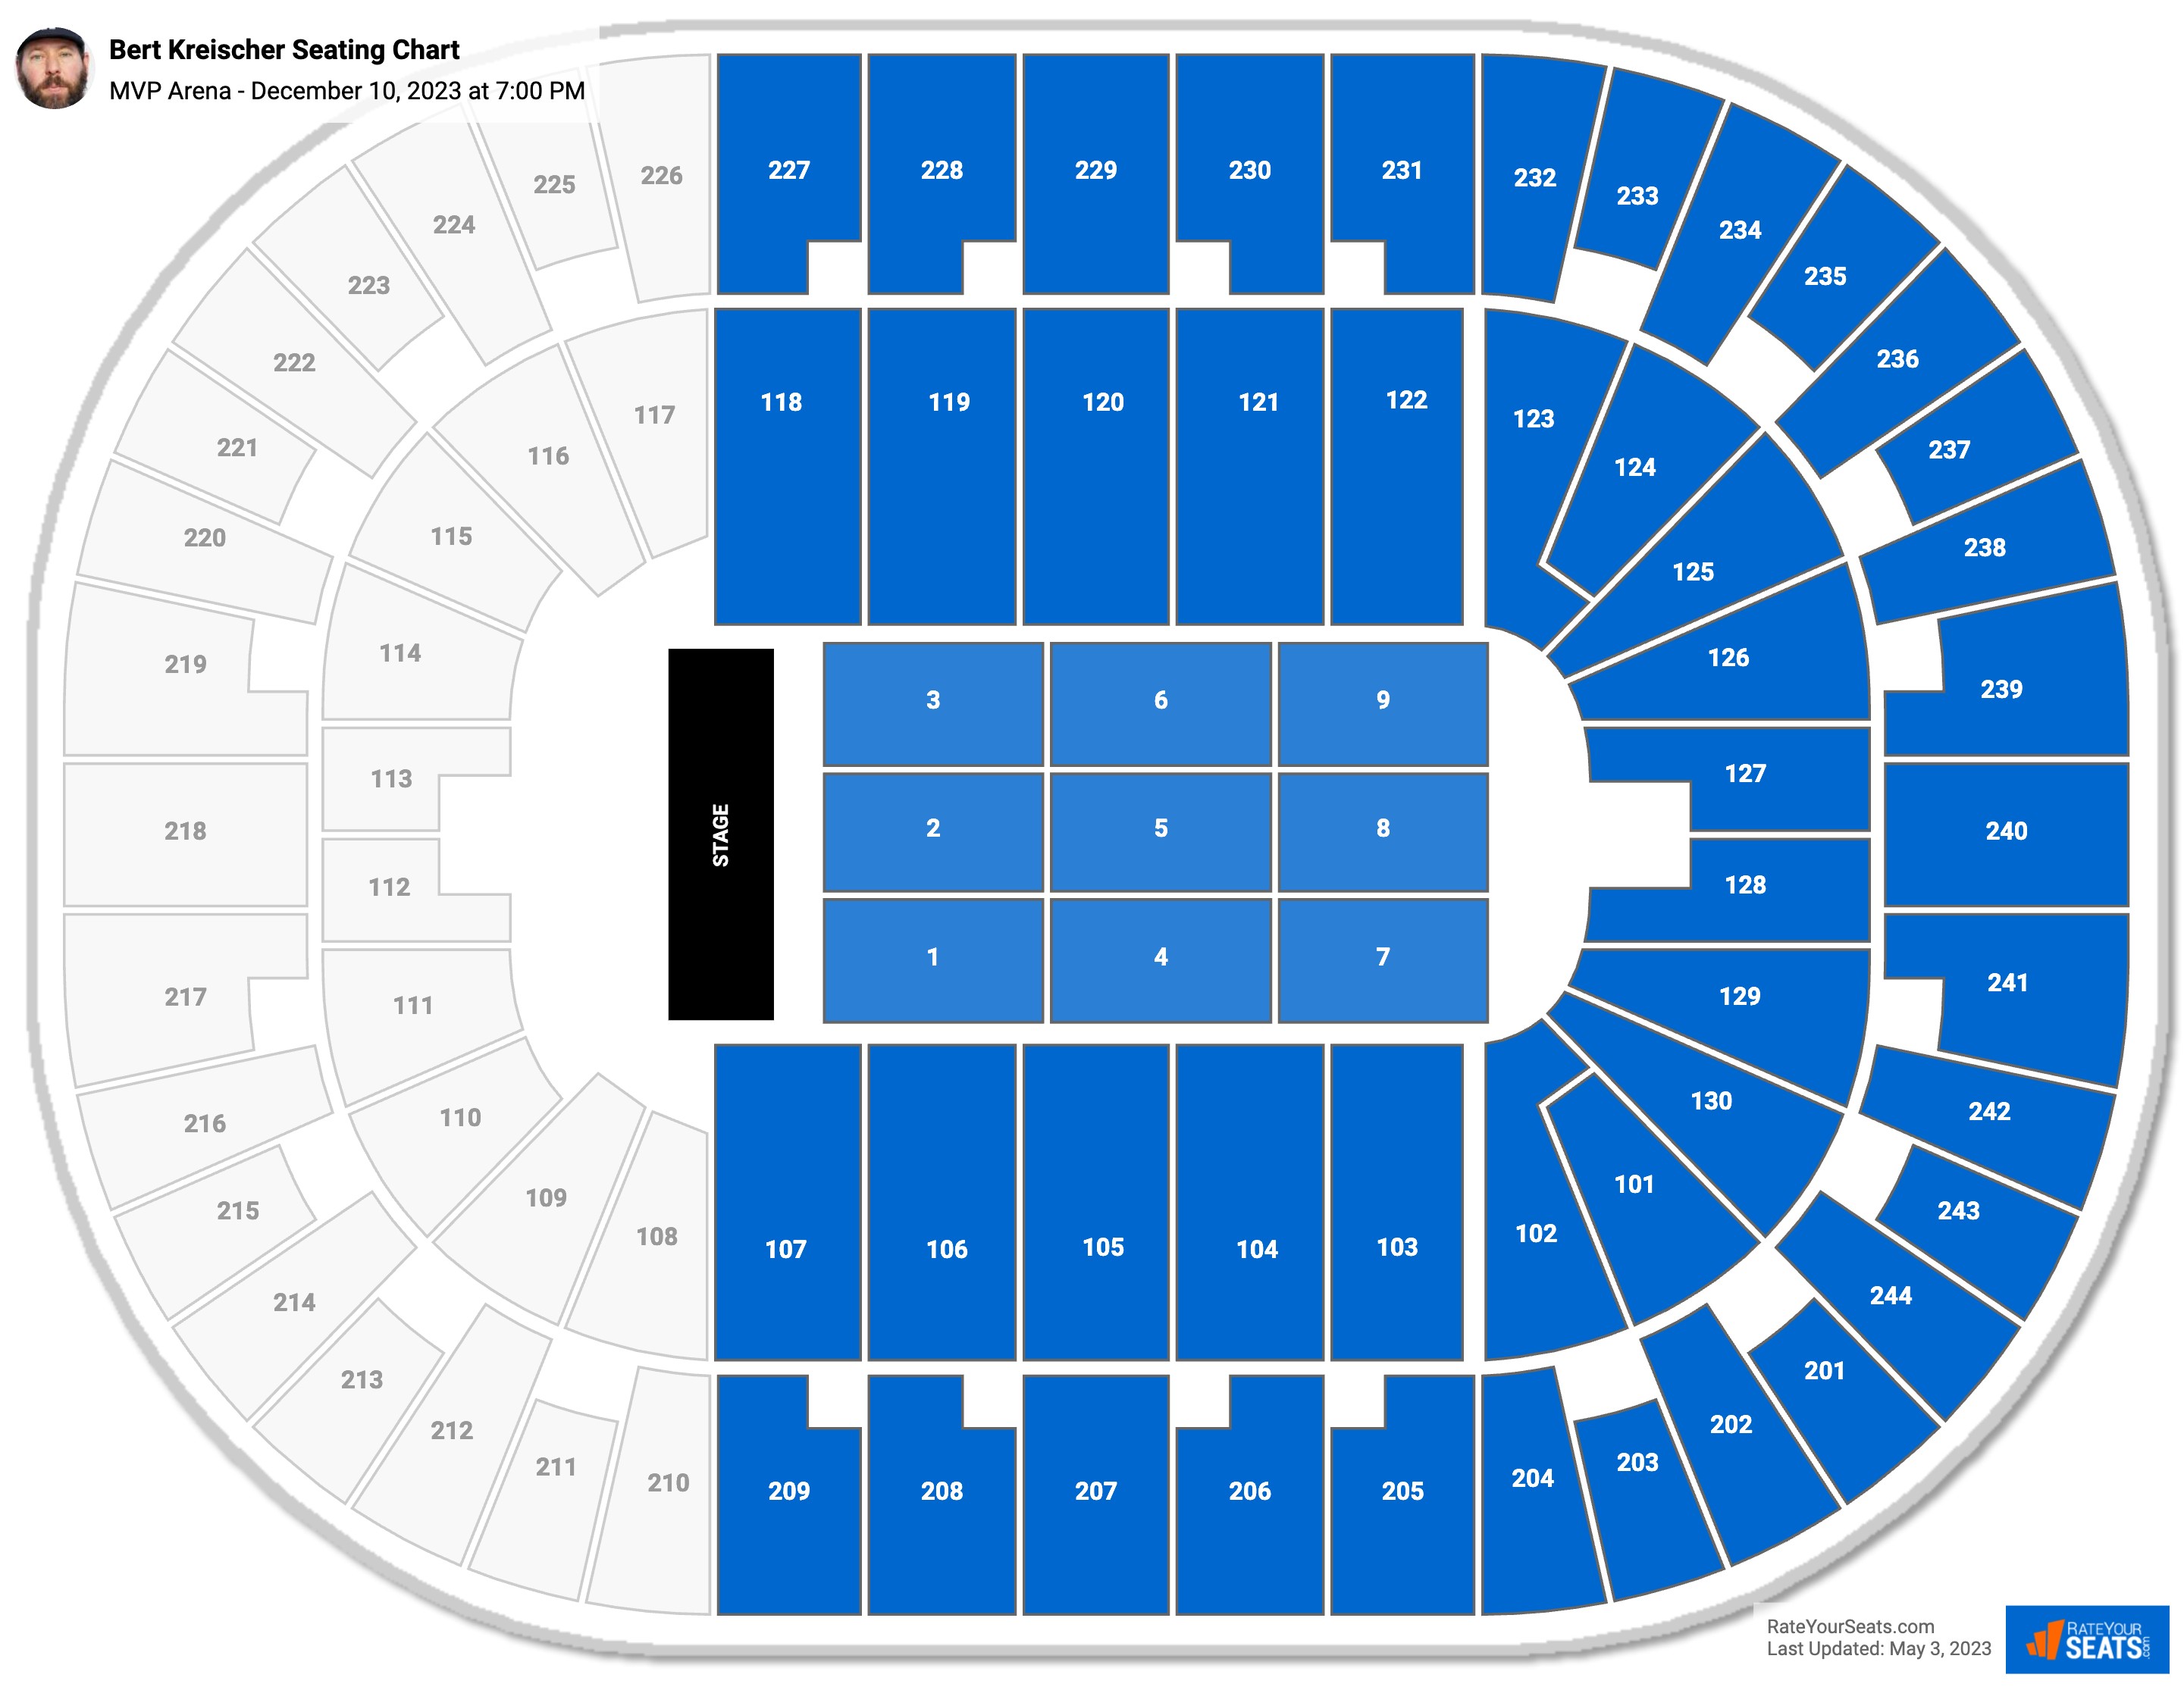 MVP Arena Concert Seating Chart